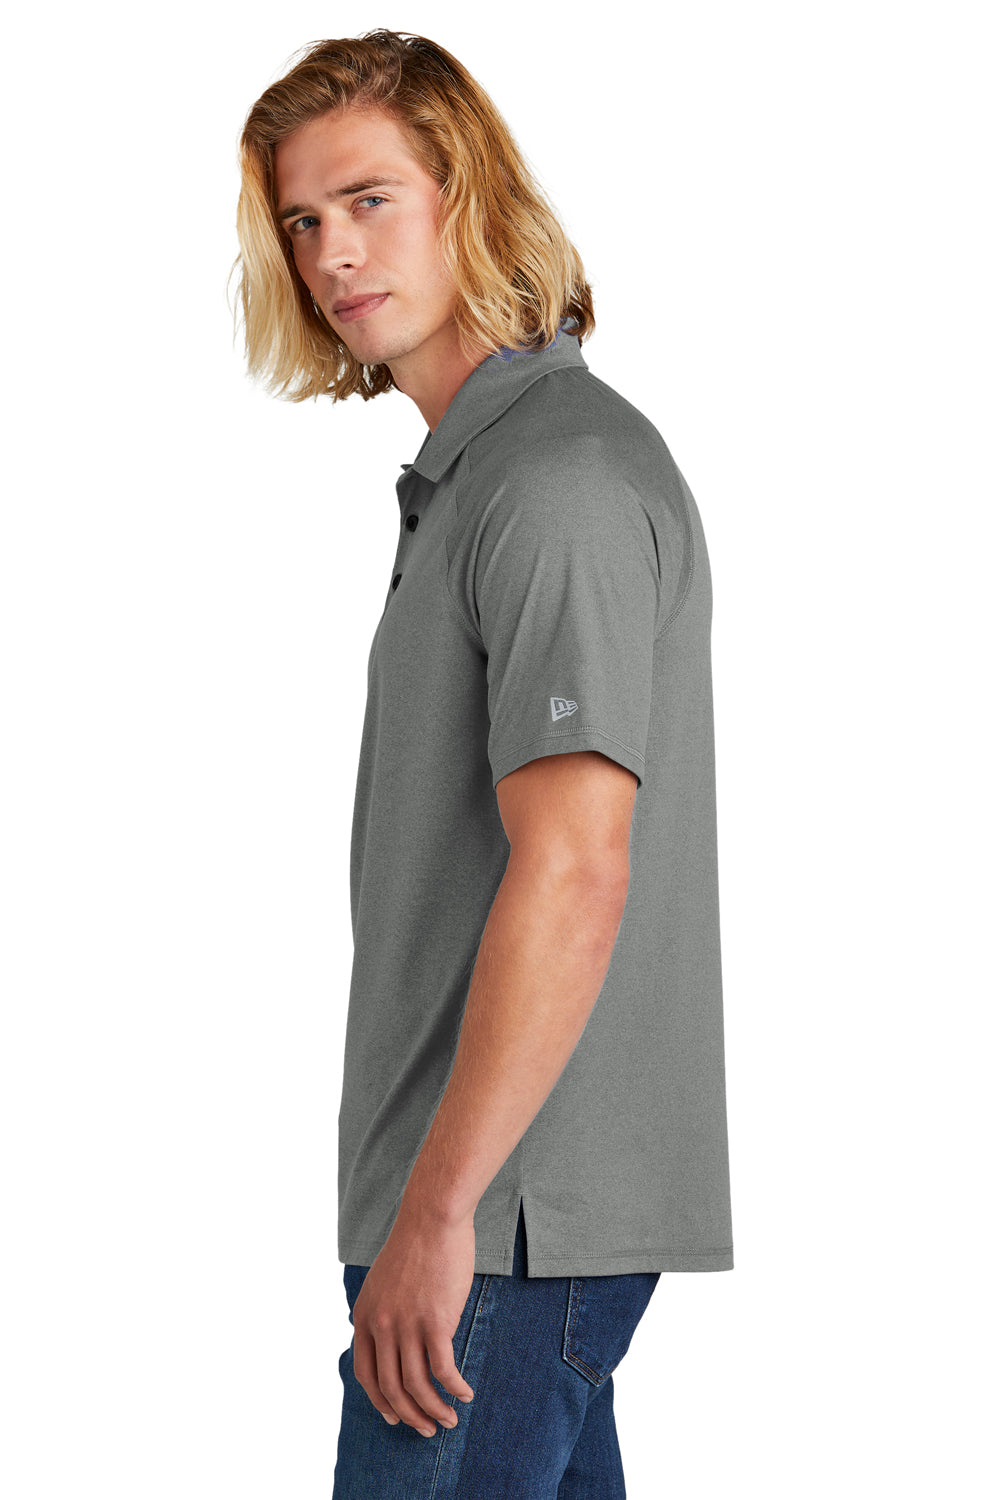 New Era Mens Power Short Sleeve Polo Shirt Heather Shadow Grey Side